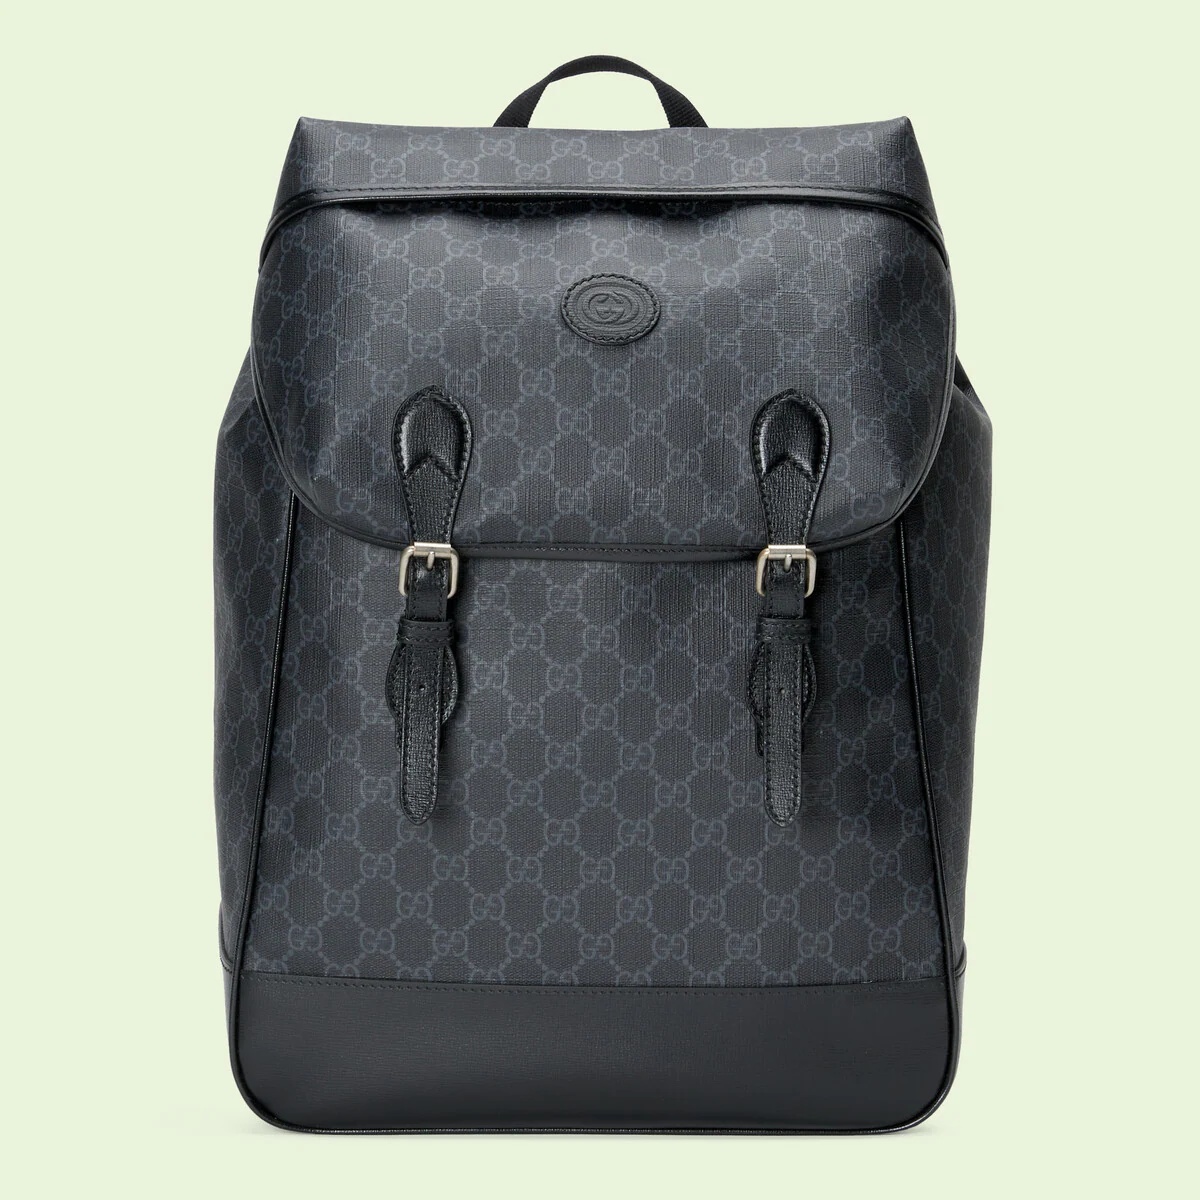 Medium backpack with Interlocking G - 1